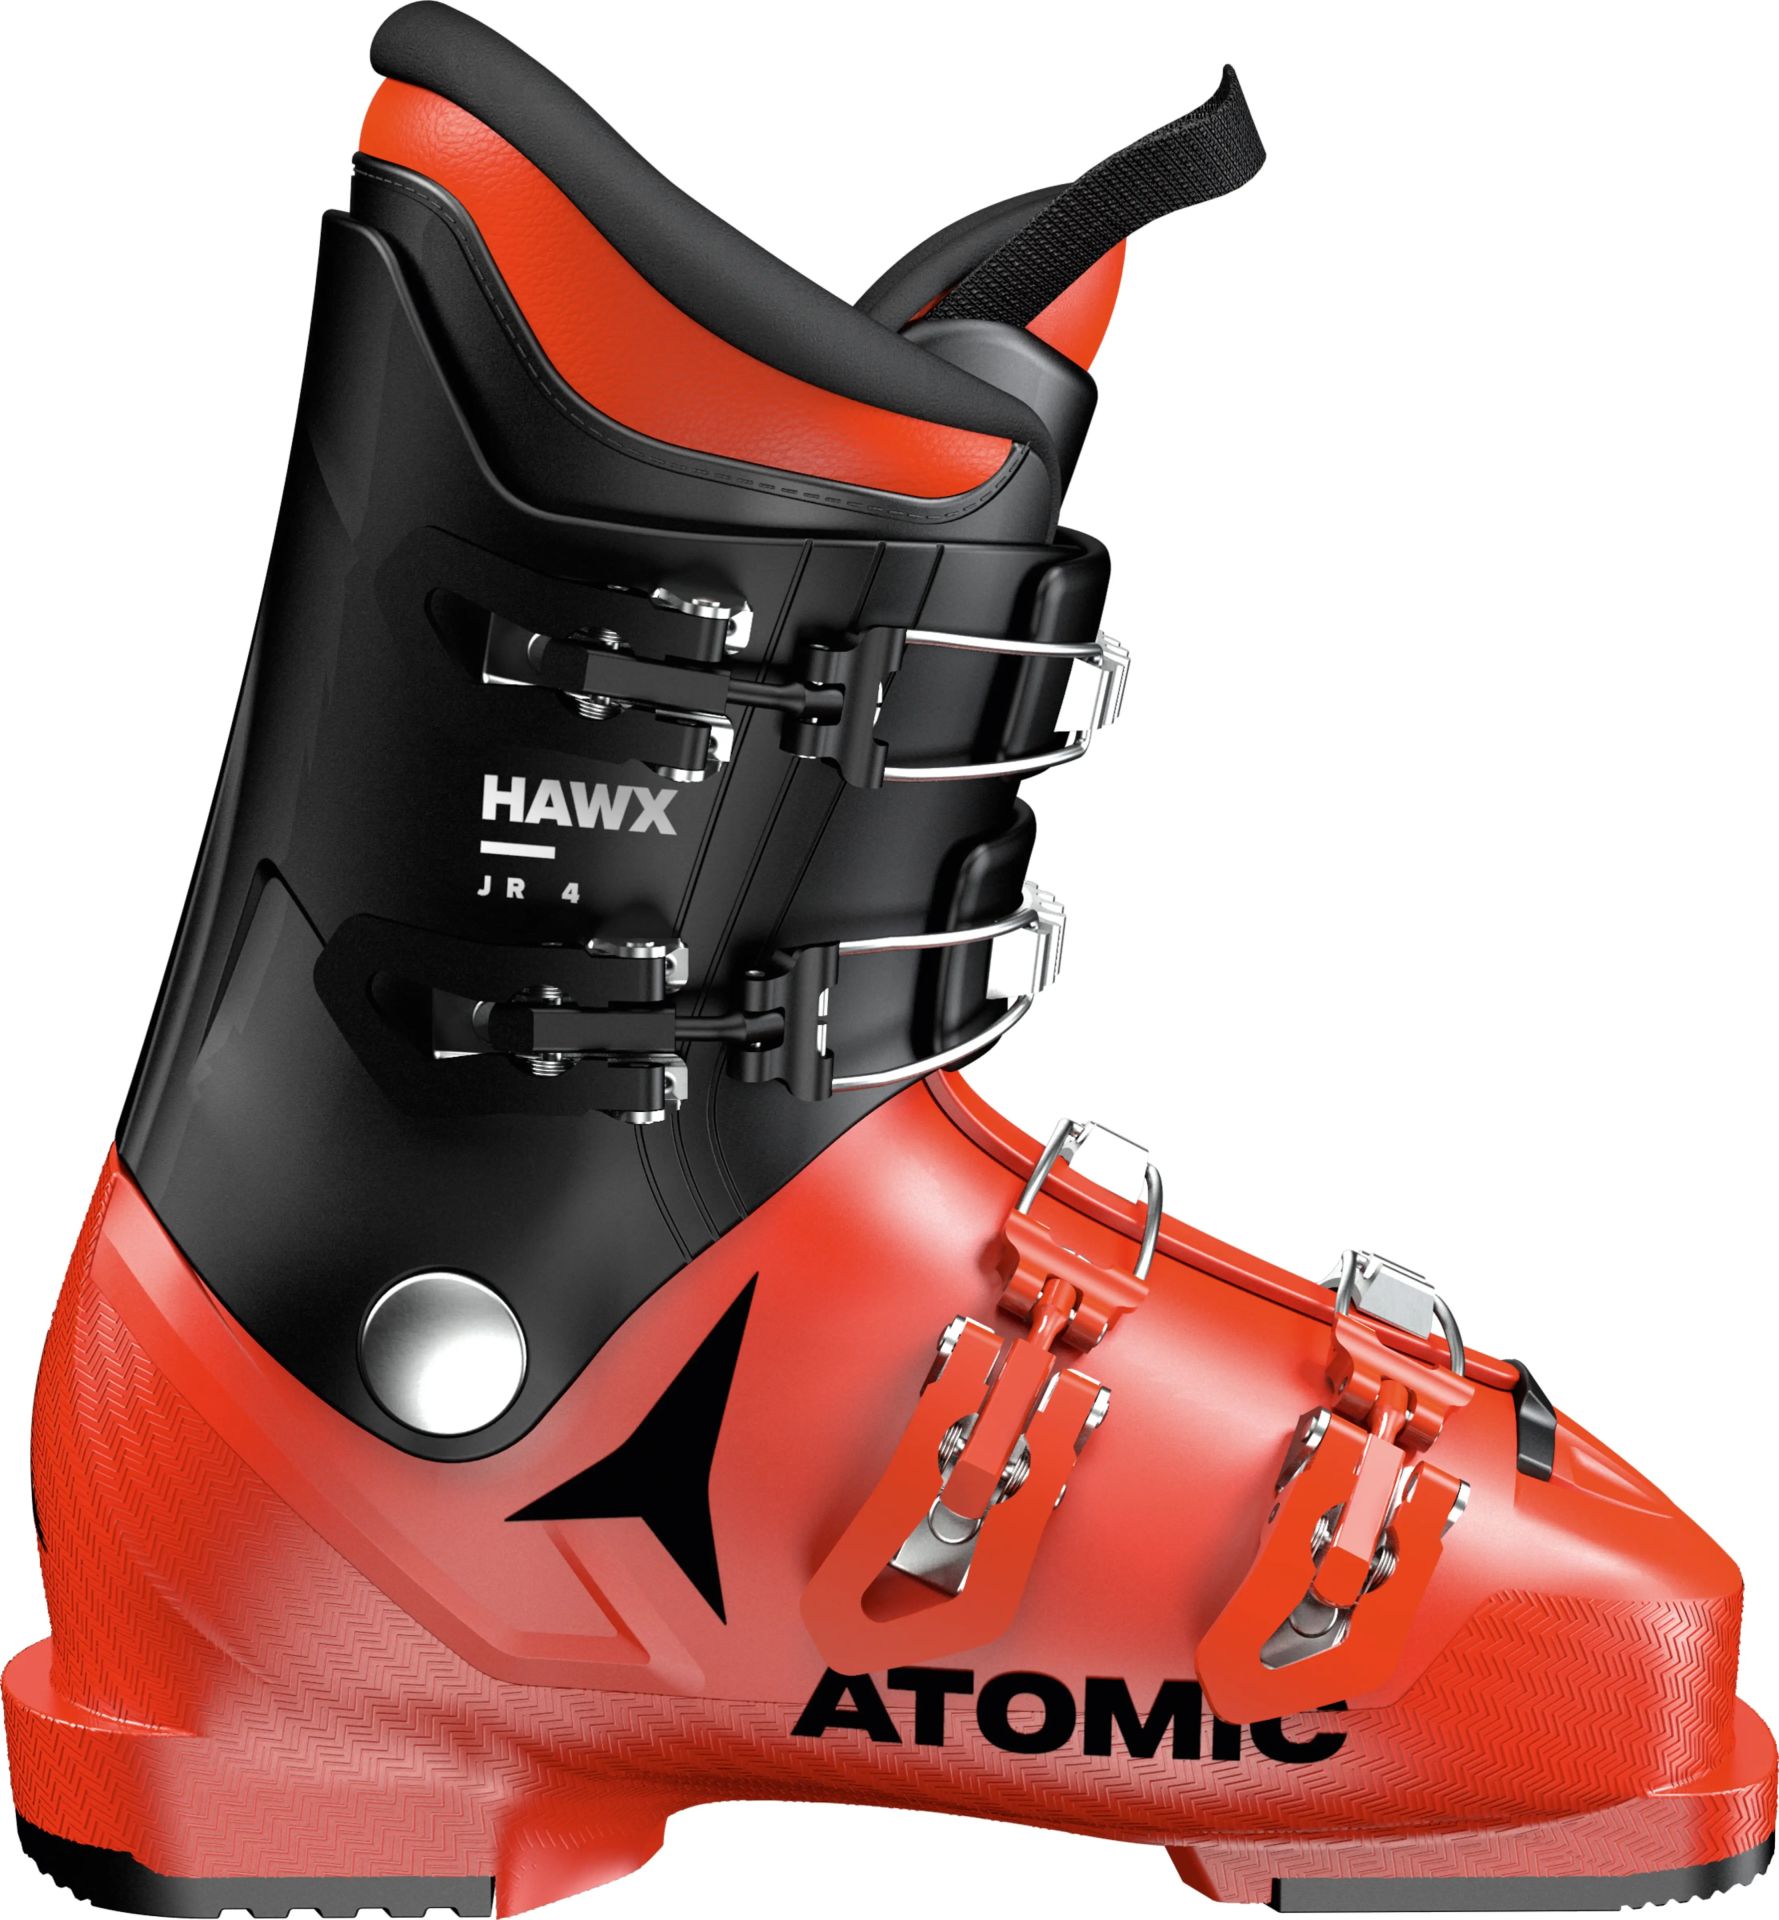 Atomic Bot Hawx Jr 4 Red/Black